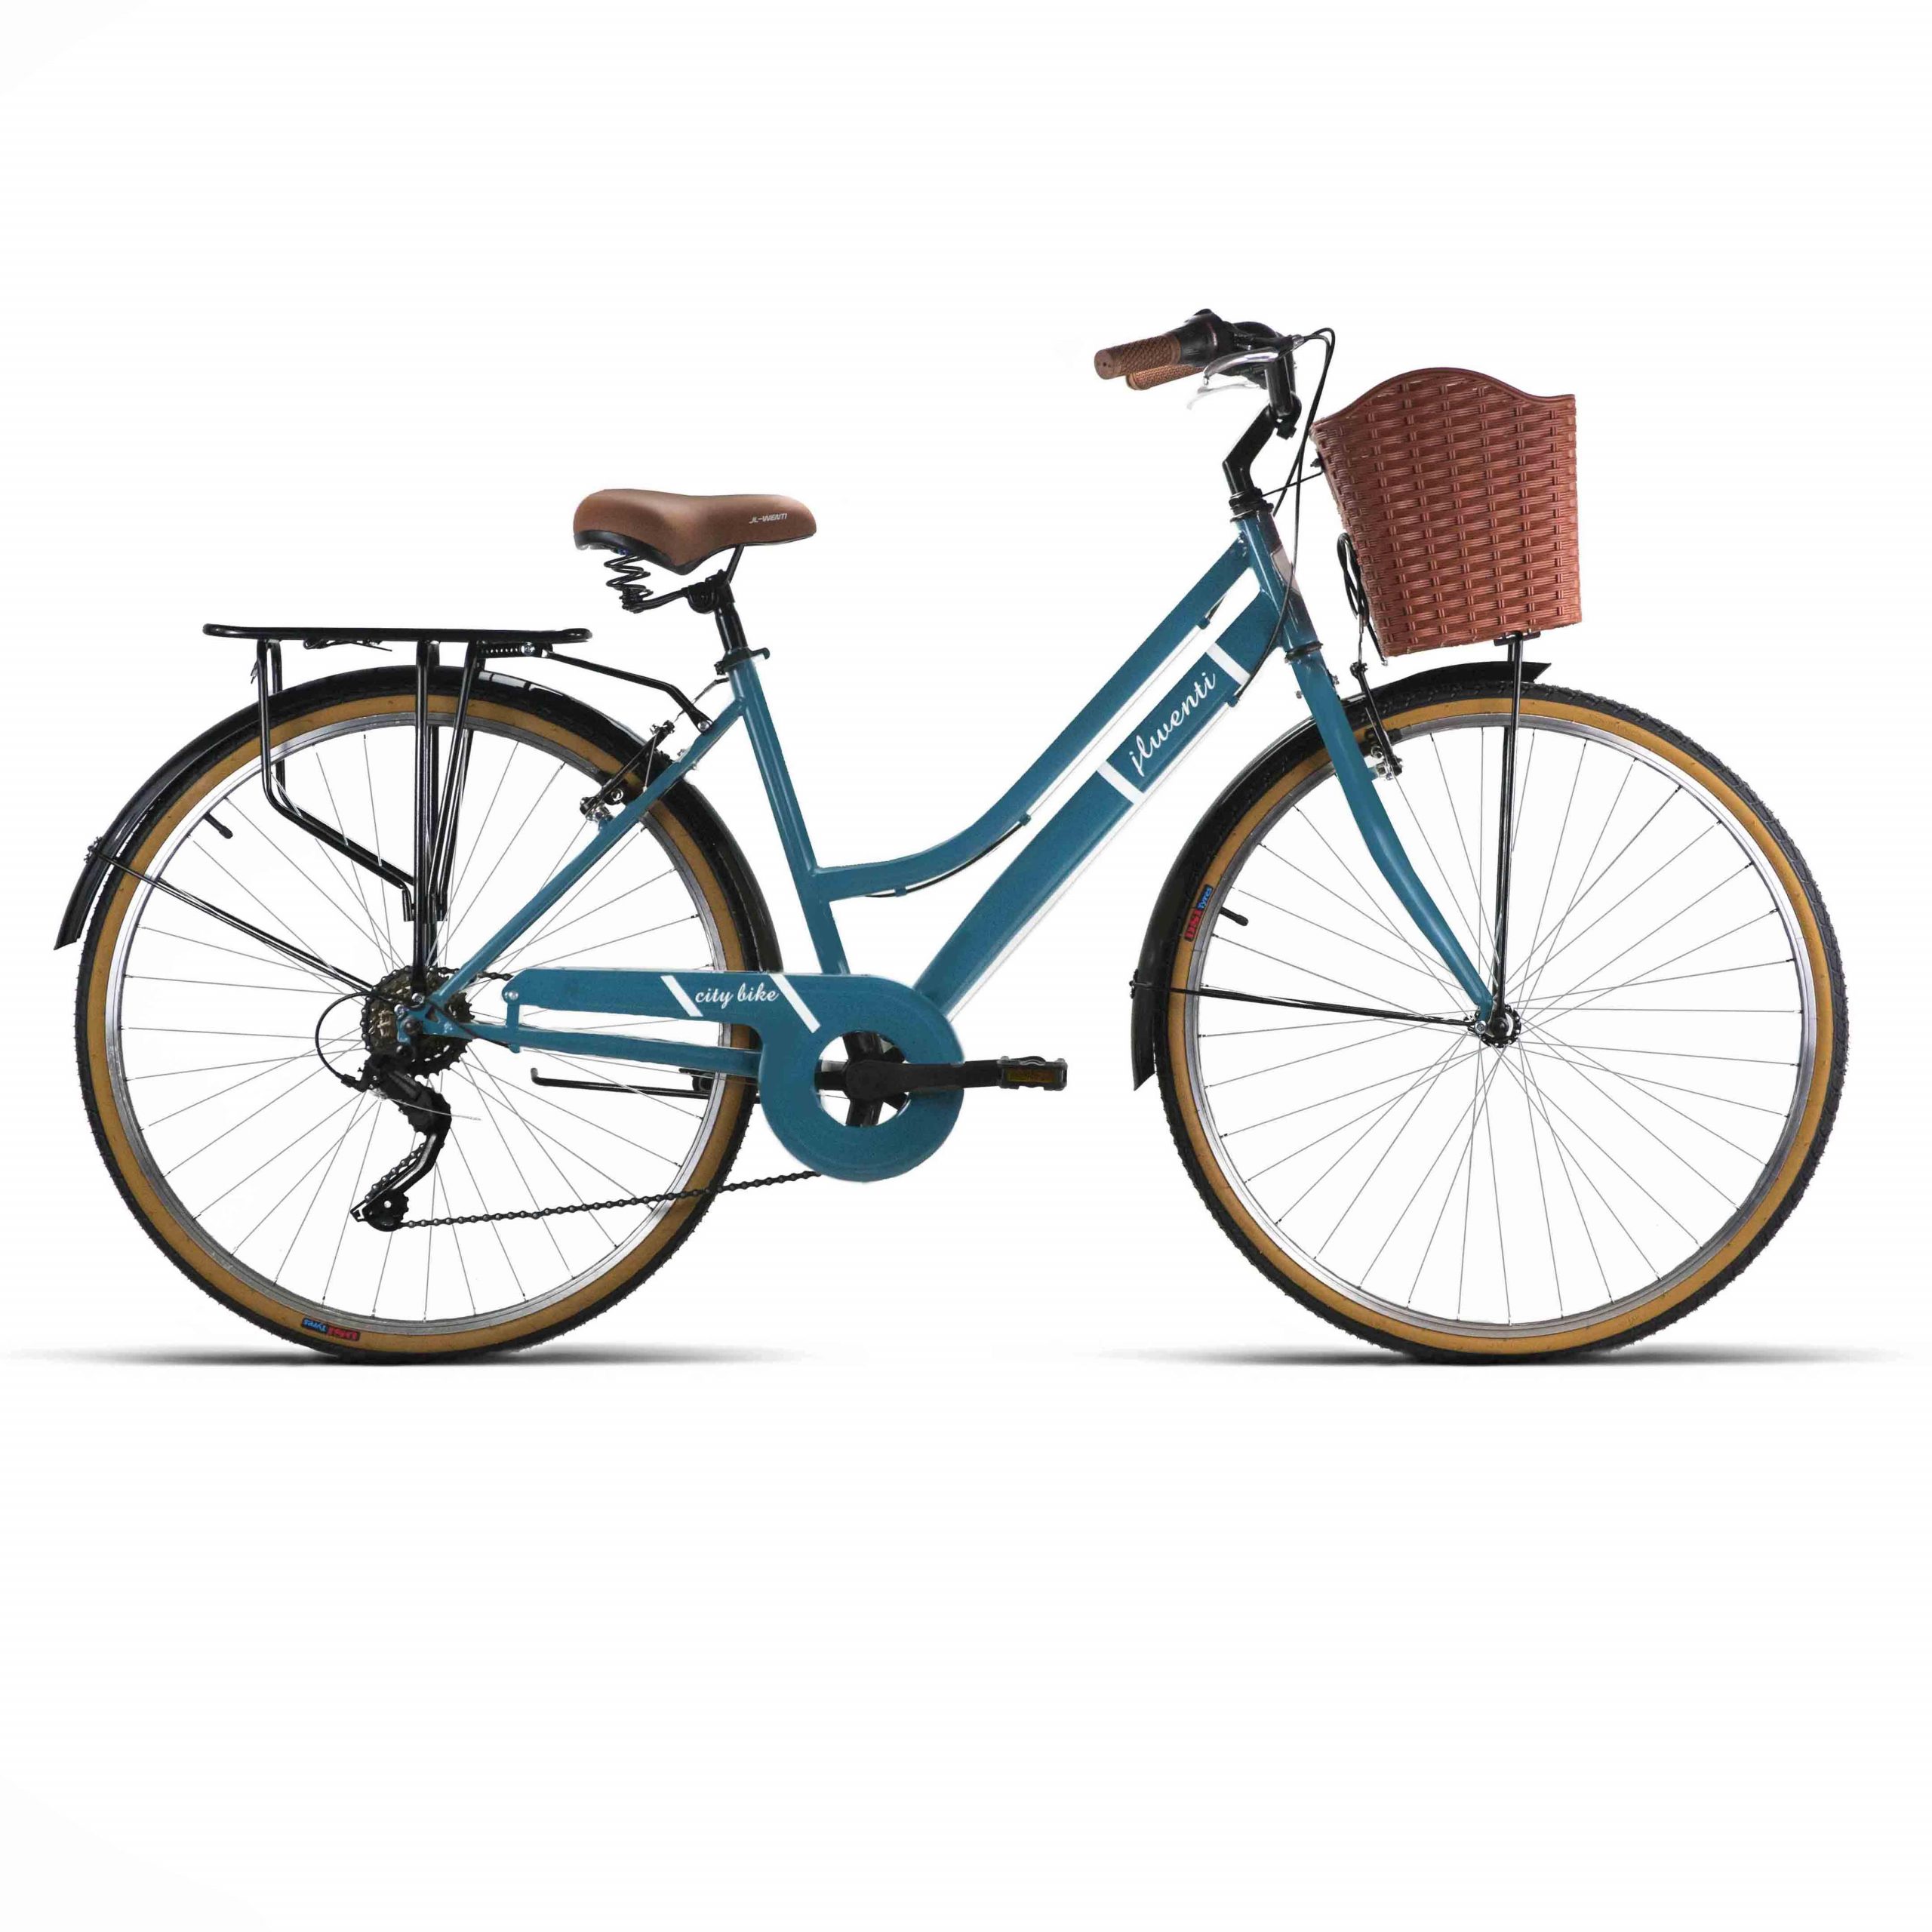 Bicicleta urbana con cesta 28 pulgad